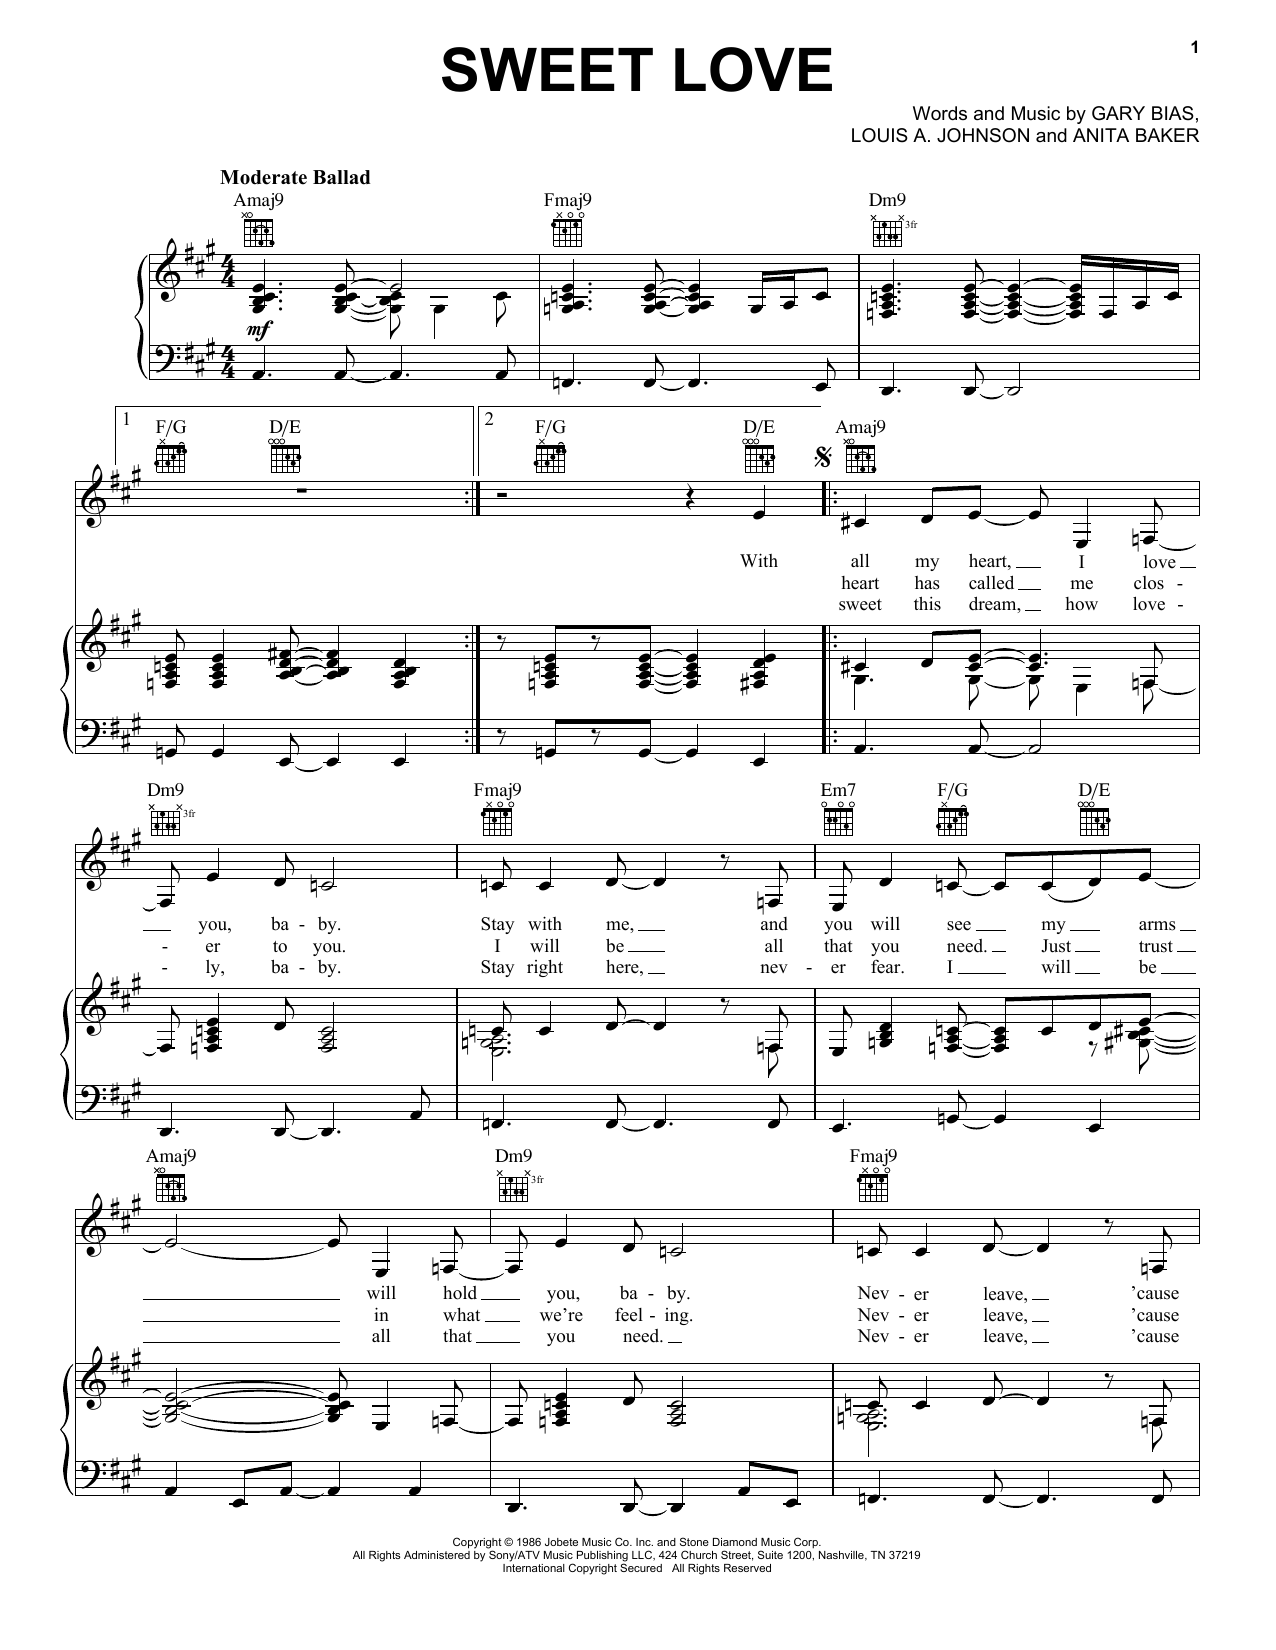 Anita Baker Sweet Love Sheet Music Notes & Chords for Keyboard Transcription - Download or Print PDF